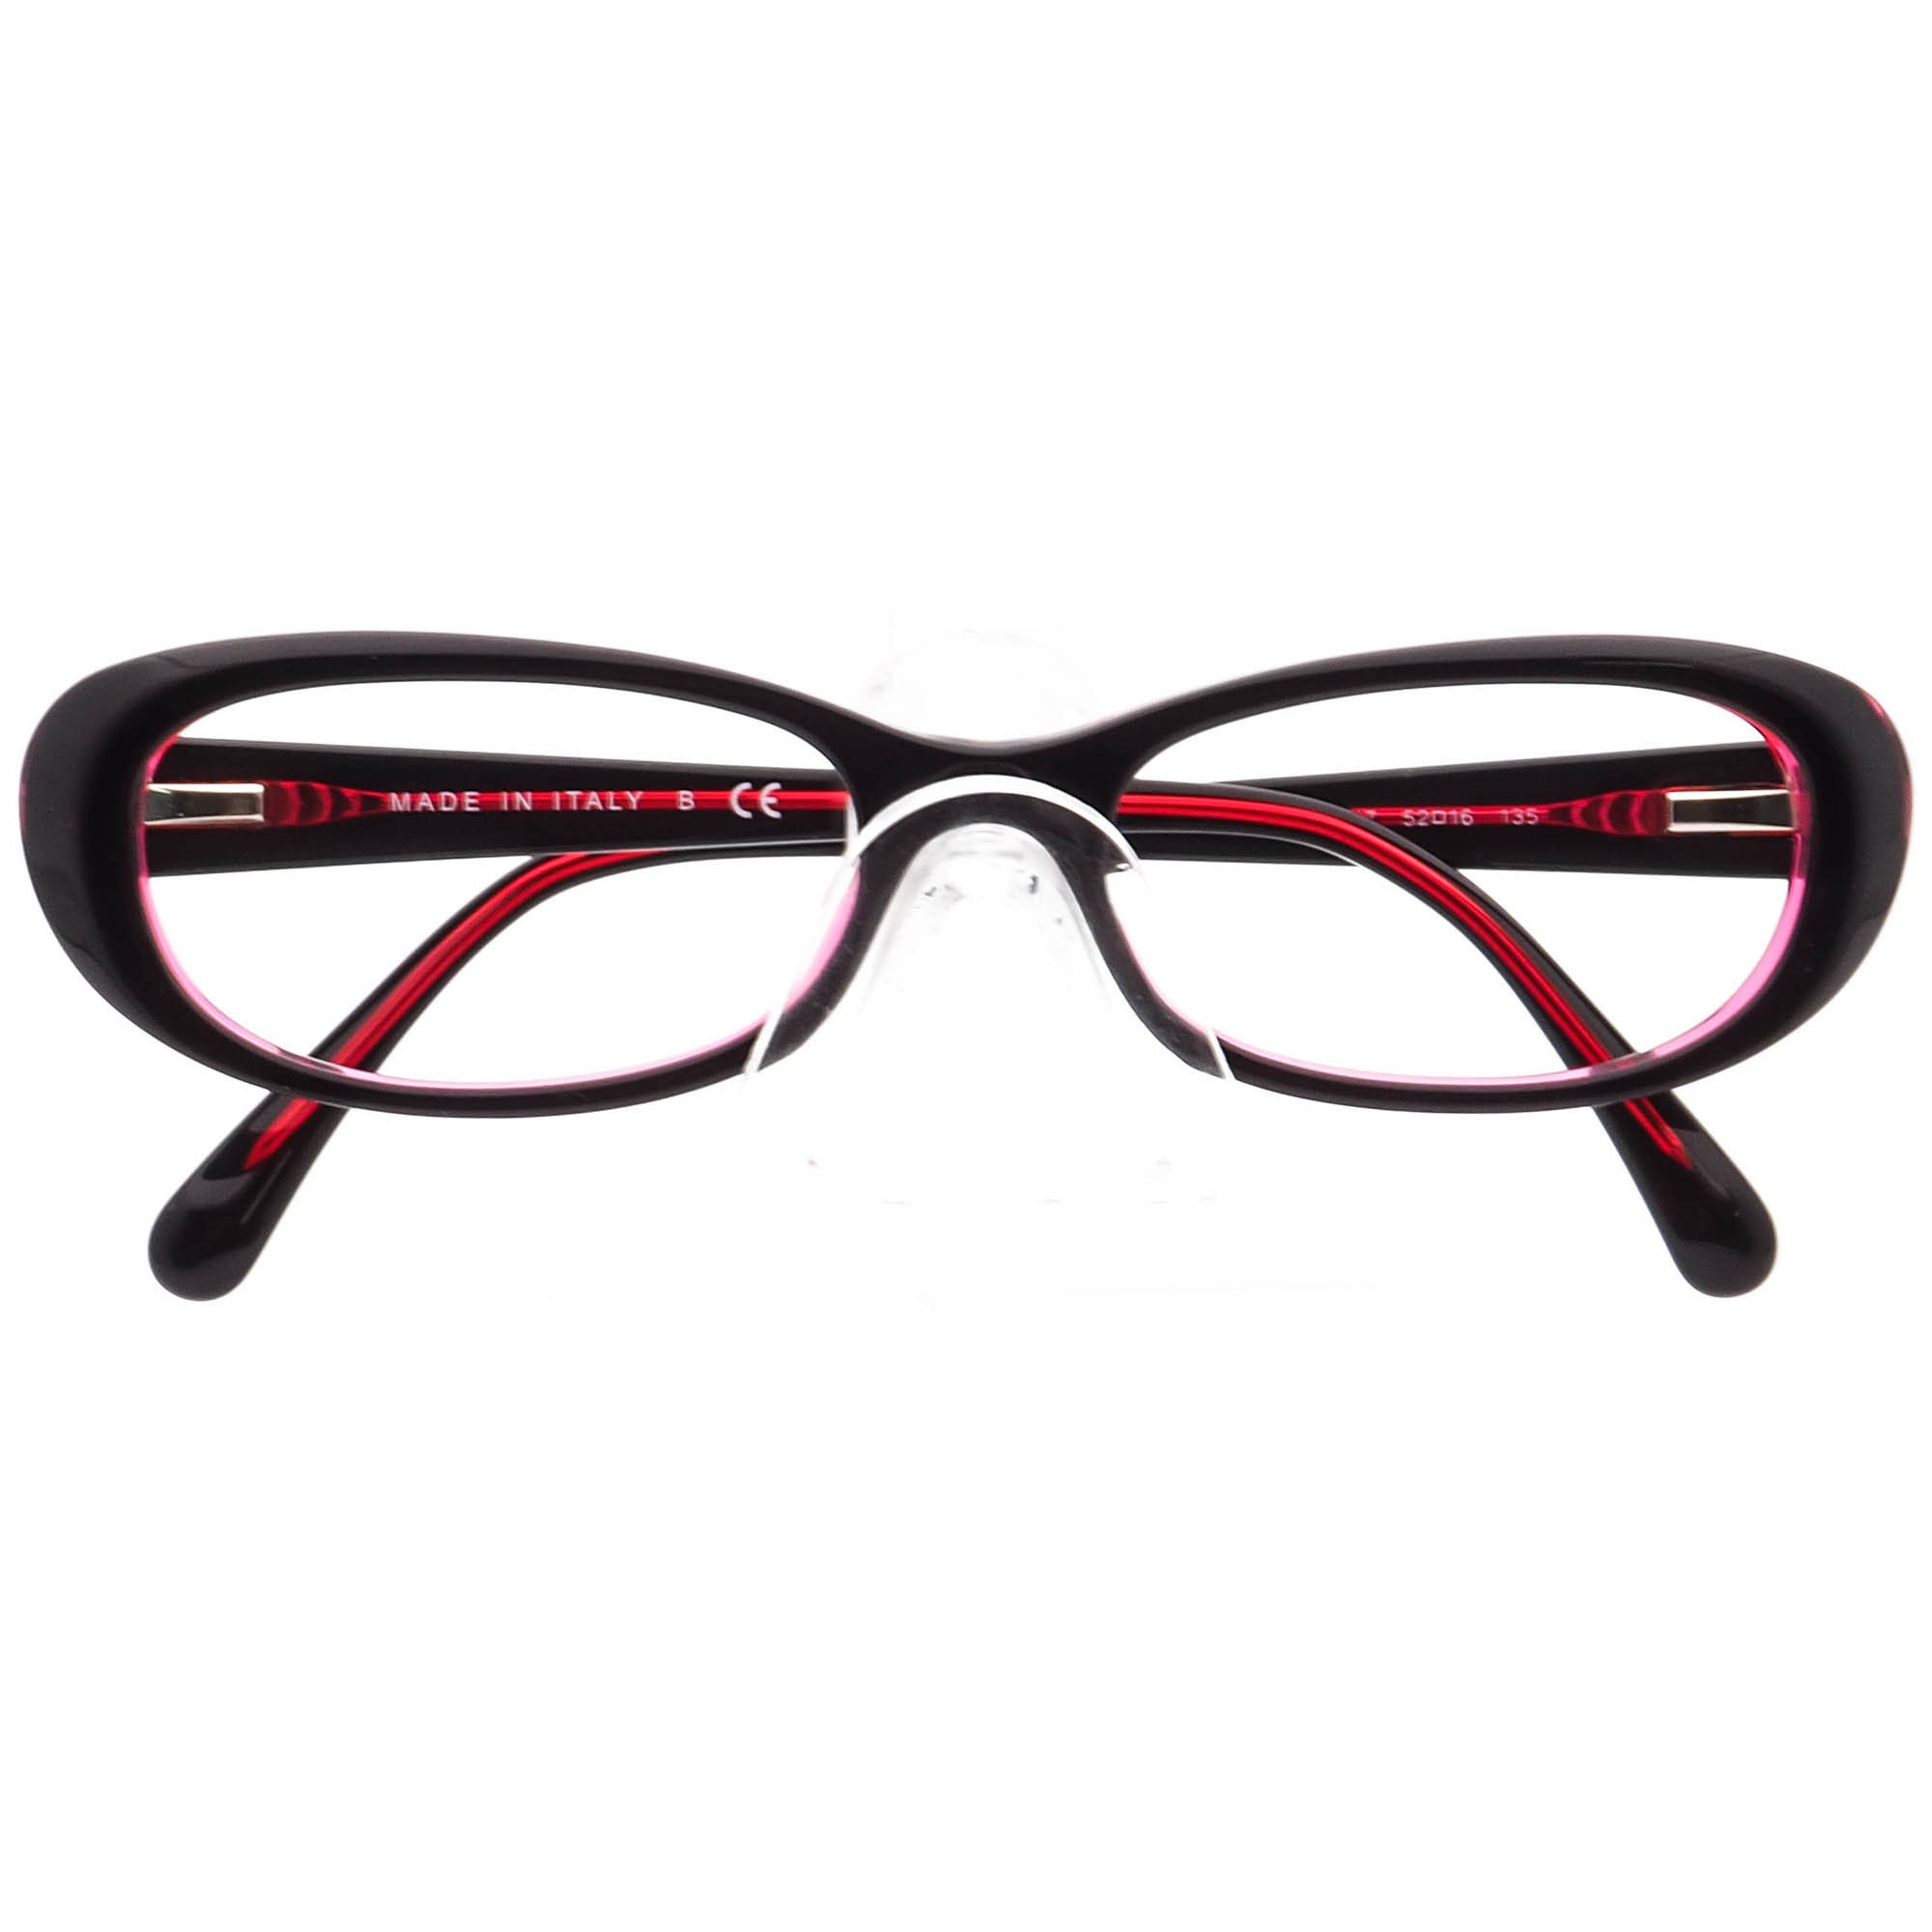 Chanel Women's Eyeglasses 3186 C.1217 Dark Merlot Oval -  Finland